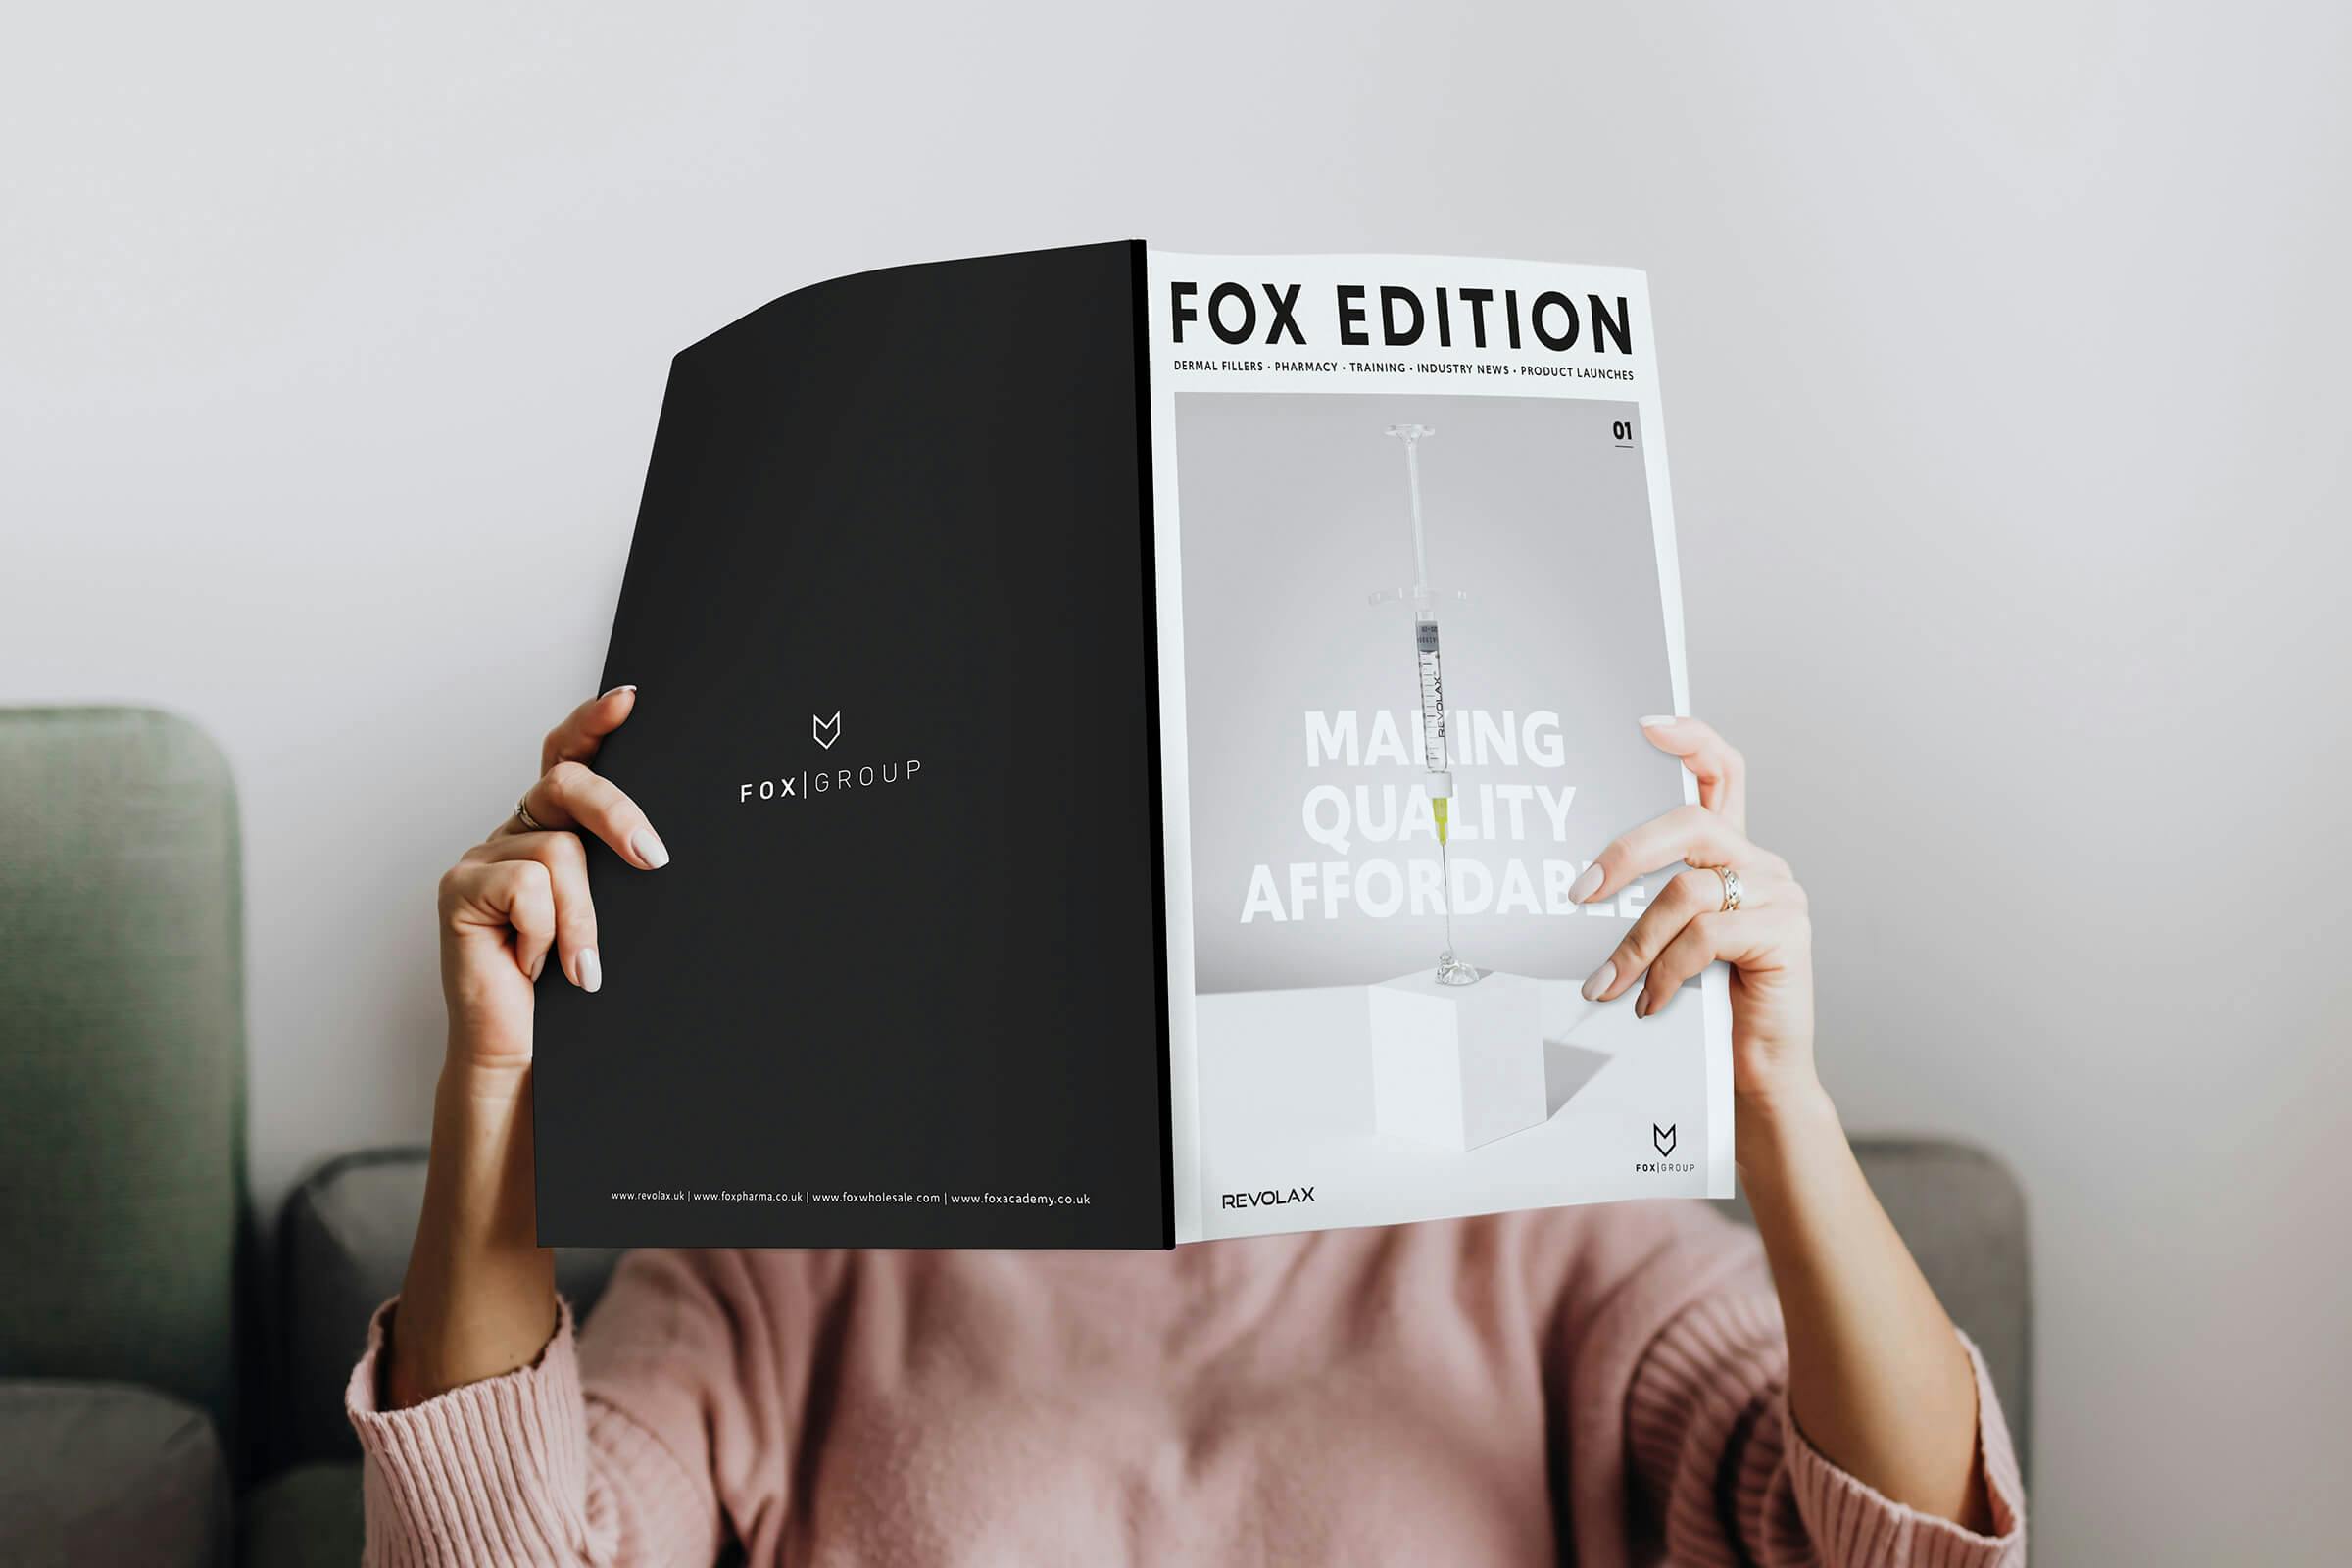 Women read the Fox Edition magazine